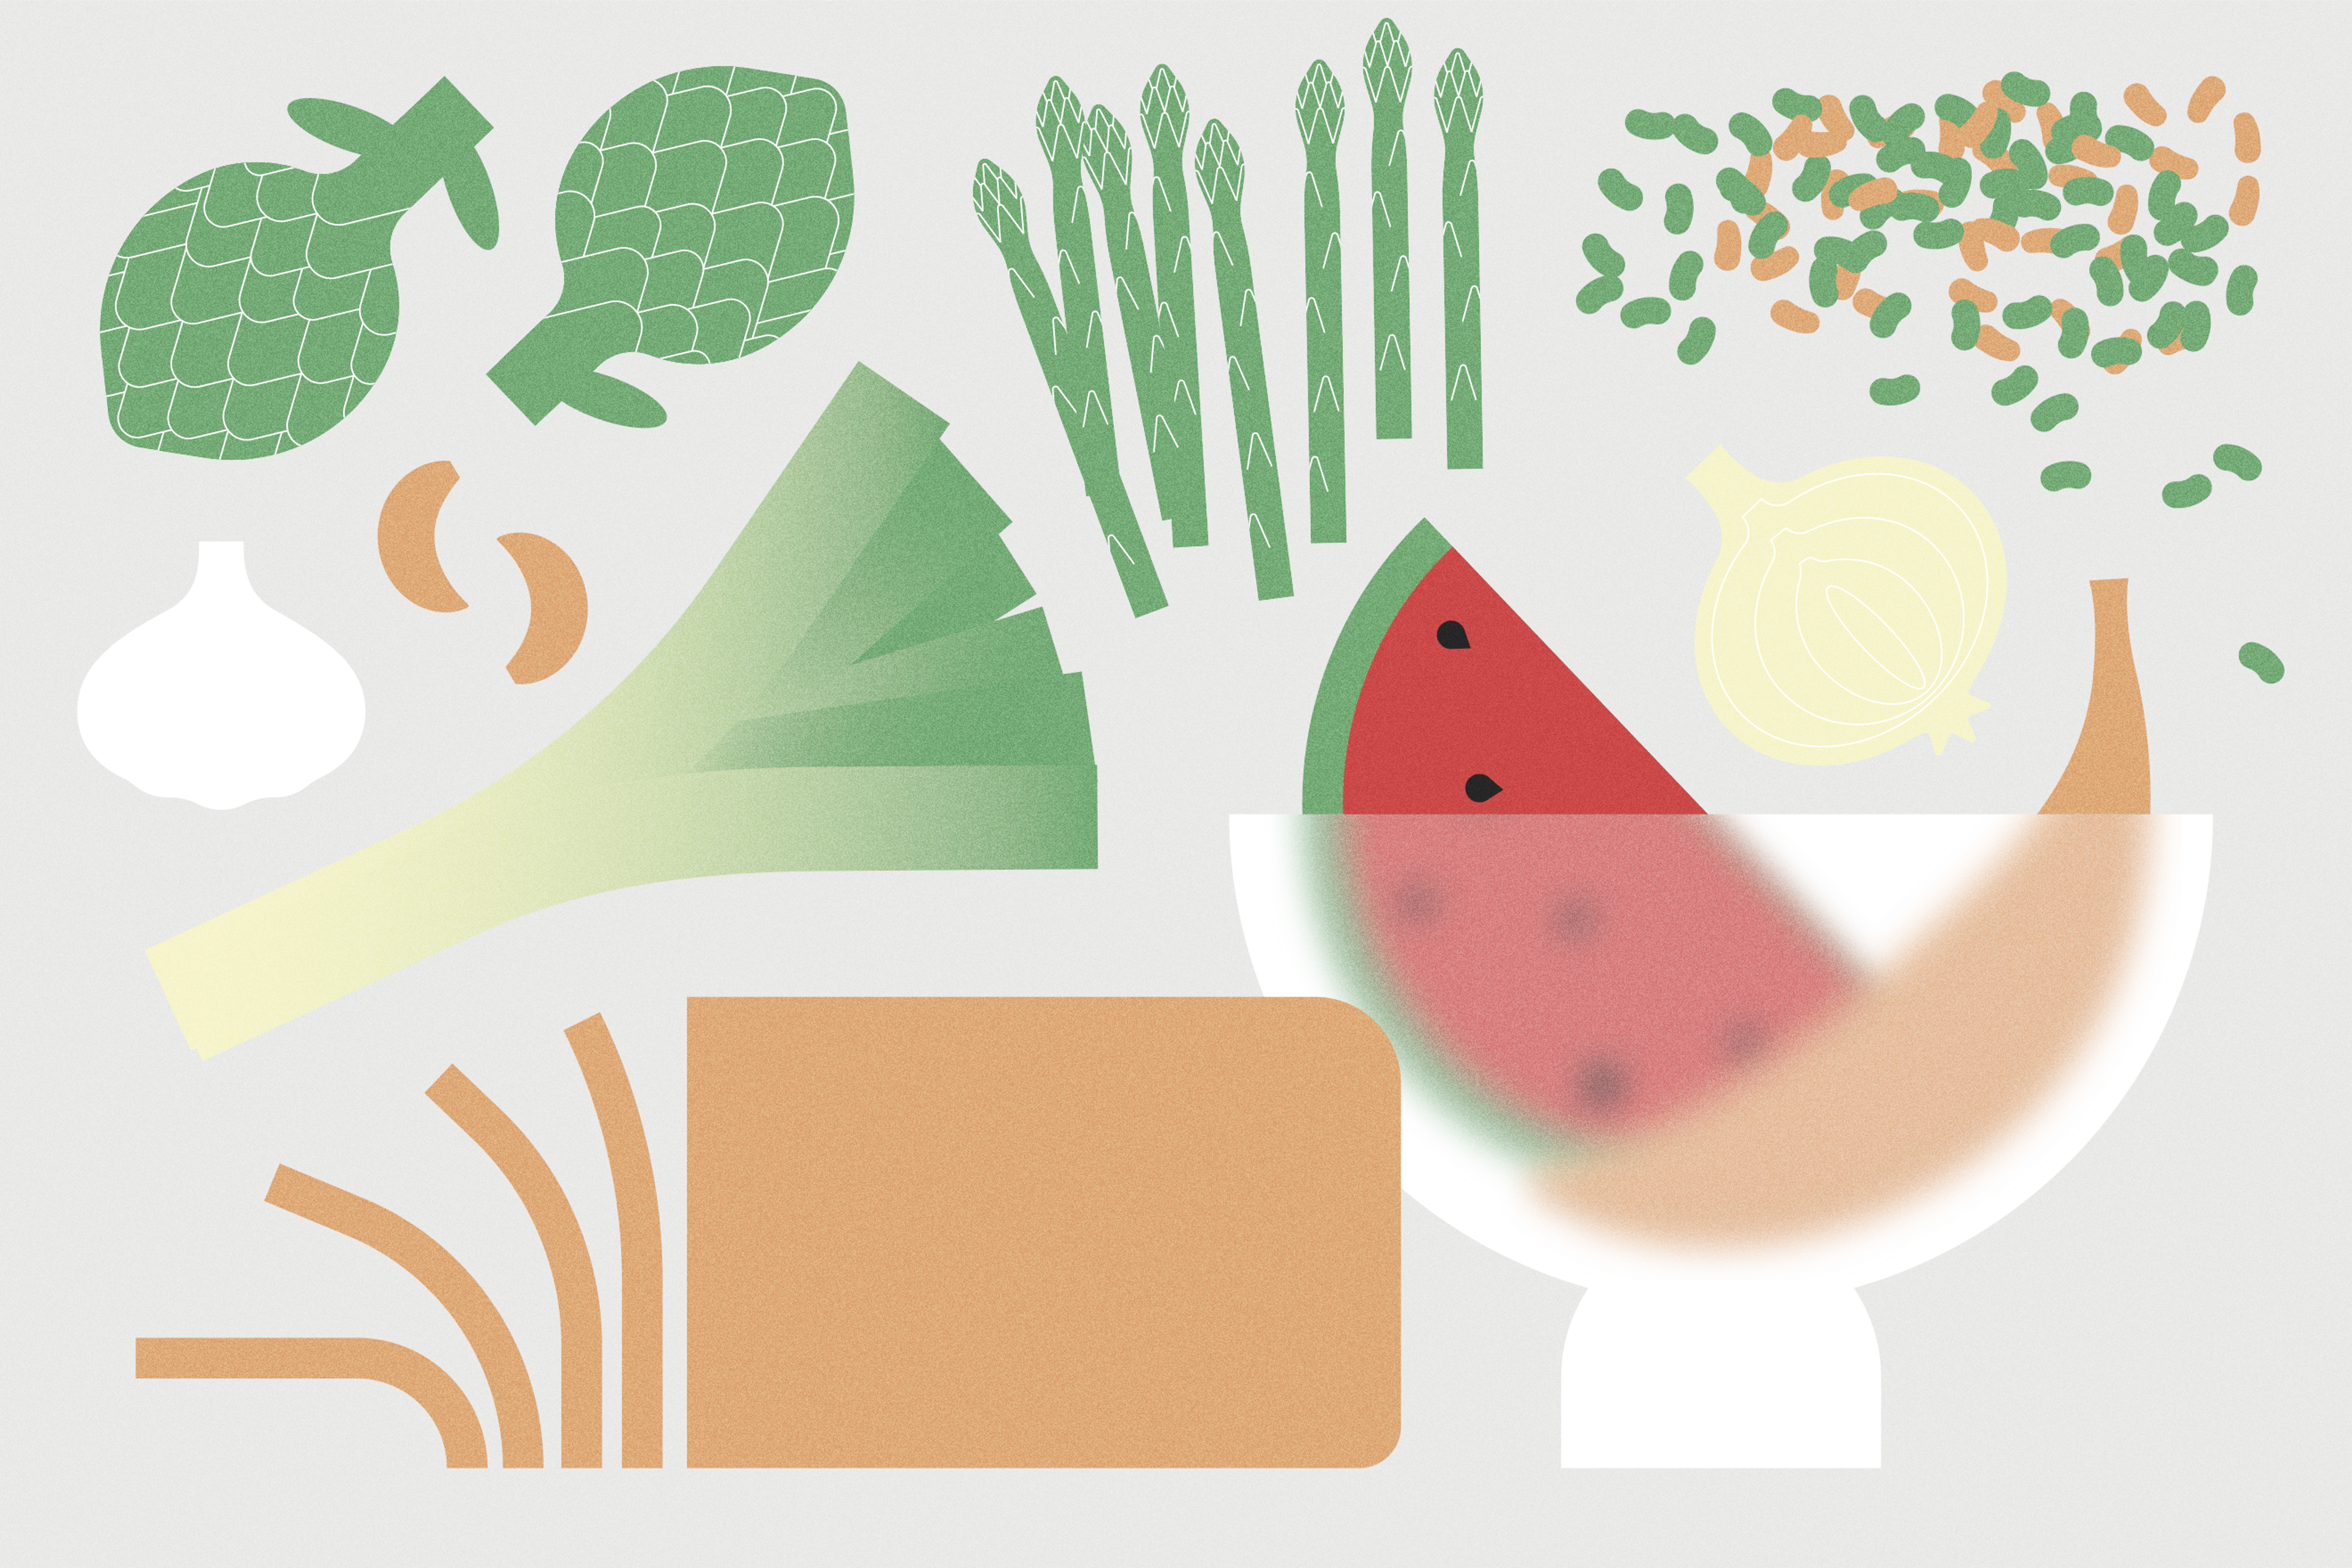 Graphic illustration of prebiotic foods